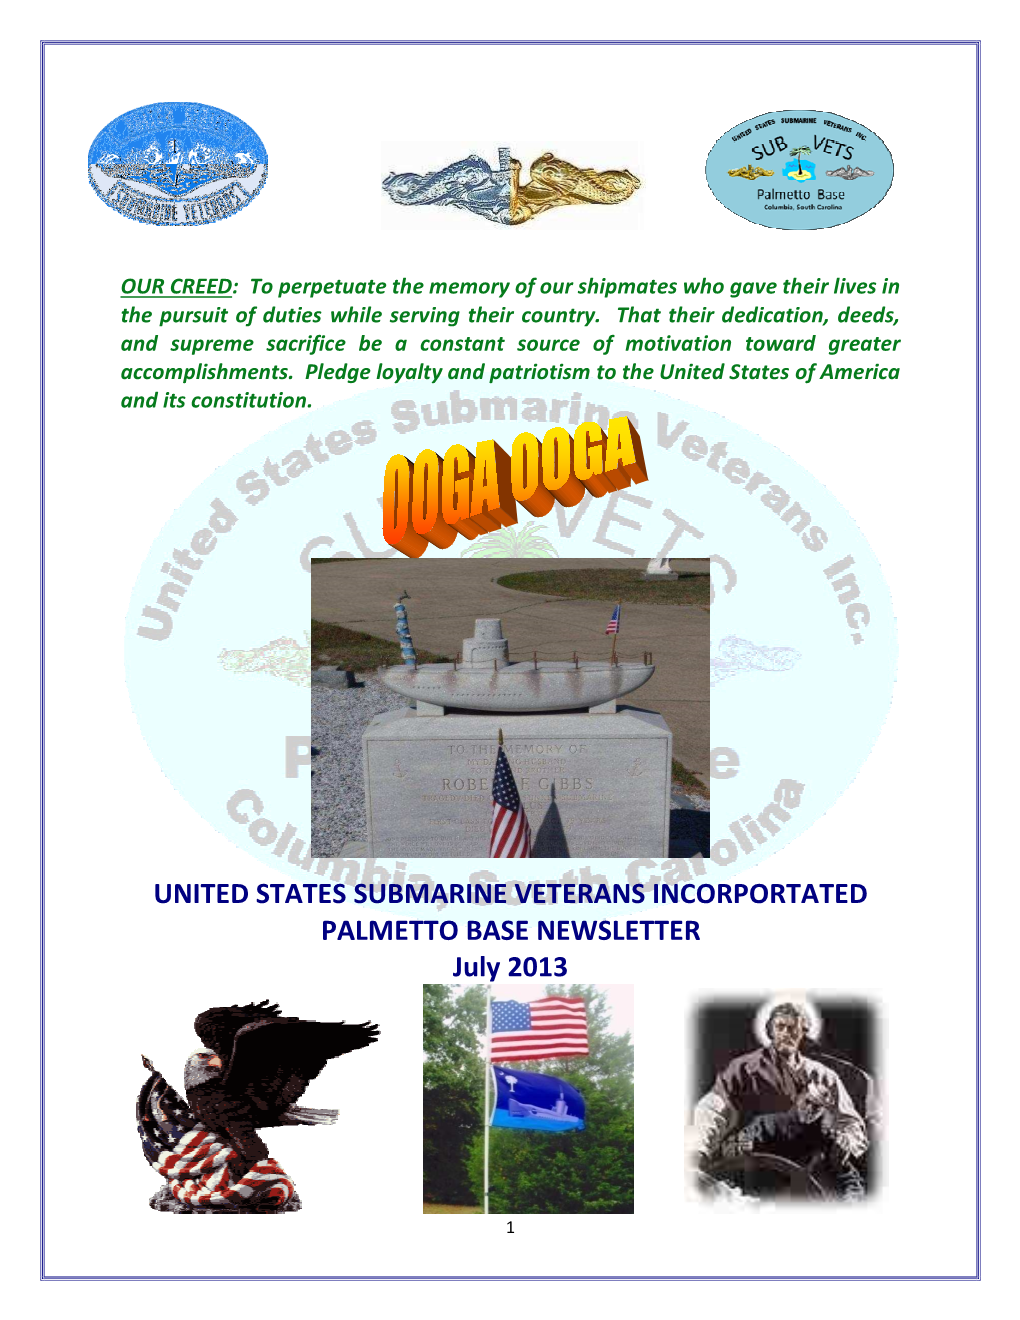 UNITED STATES SUBMARINE VETERANS INCORPORTATED PALMETTO BASE NEWSLETTER July 2013